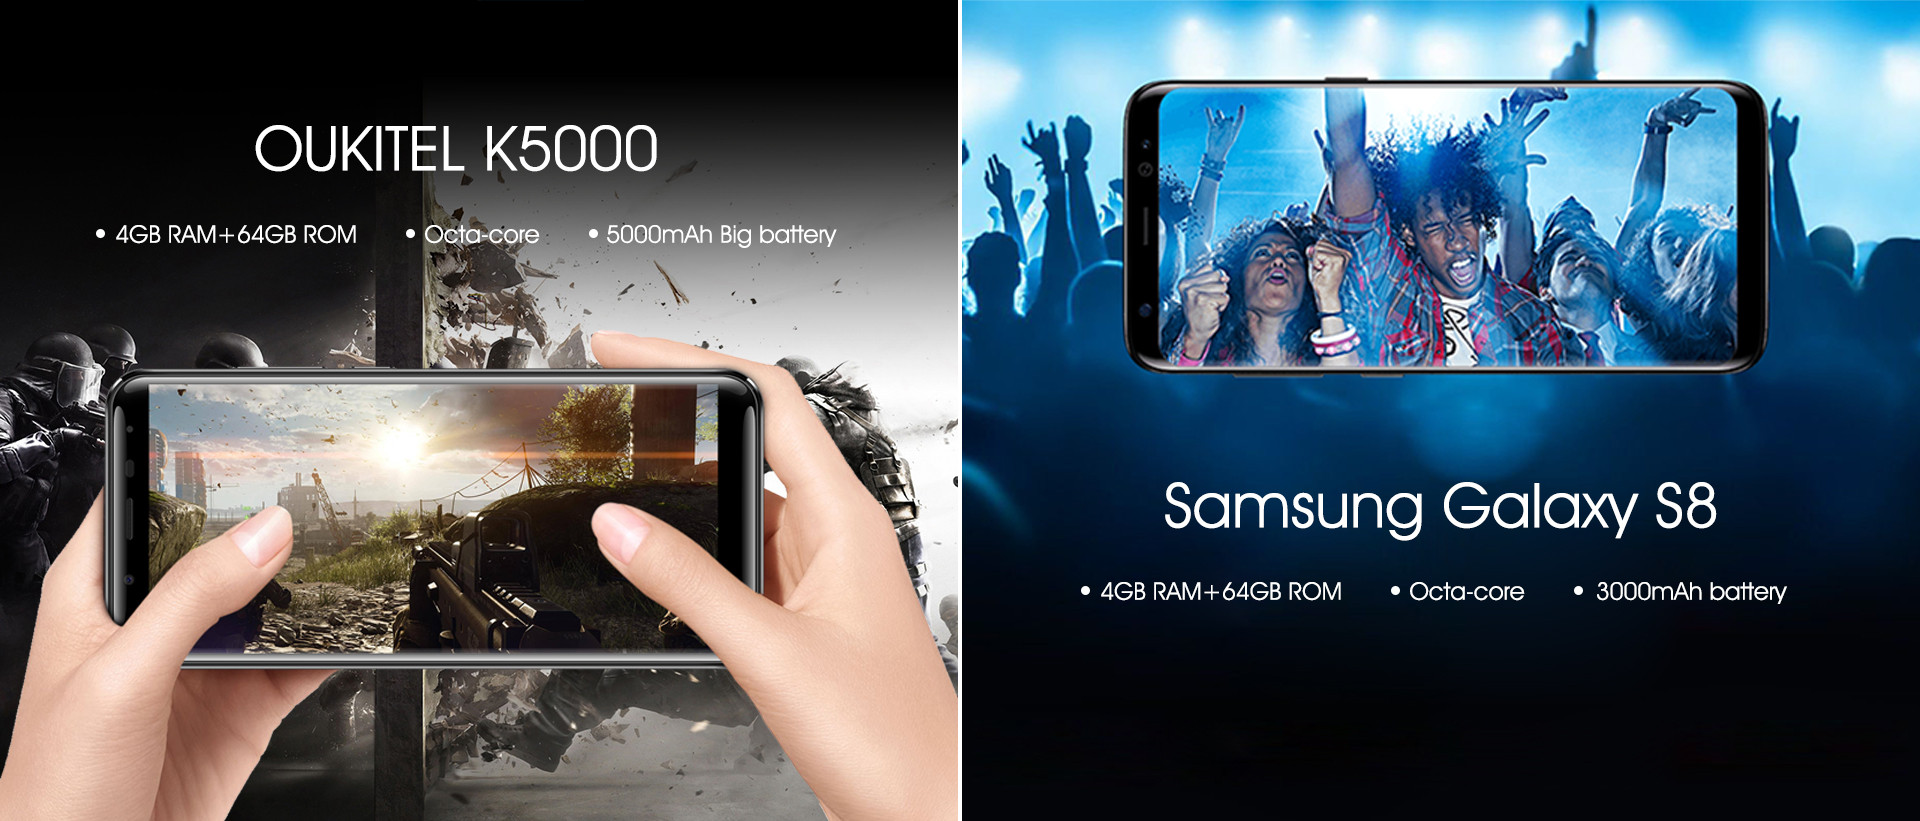 Смартфон Oukitel K5000 идет по стопам Samsung Galaxy S8-3